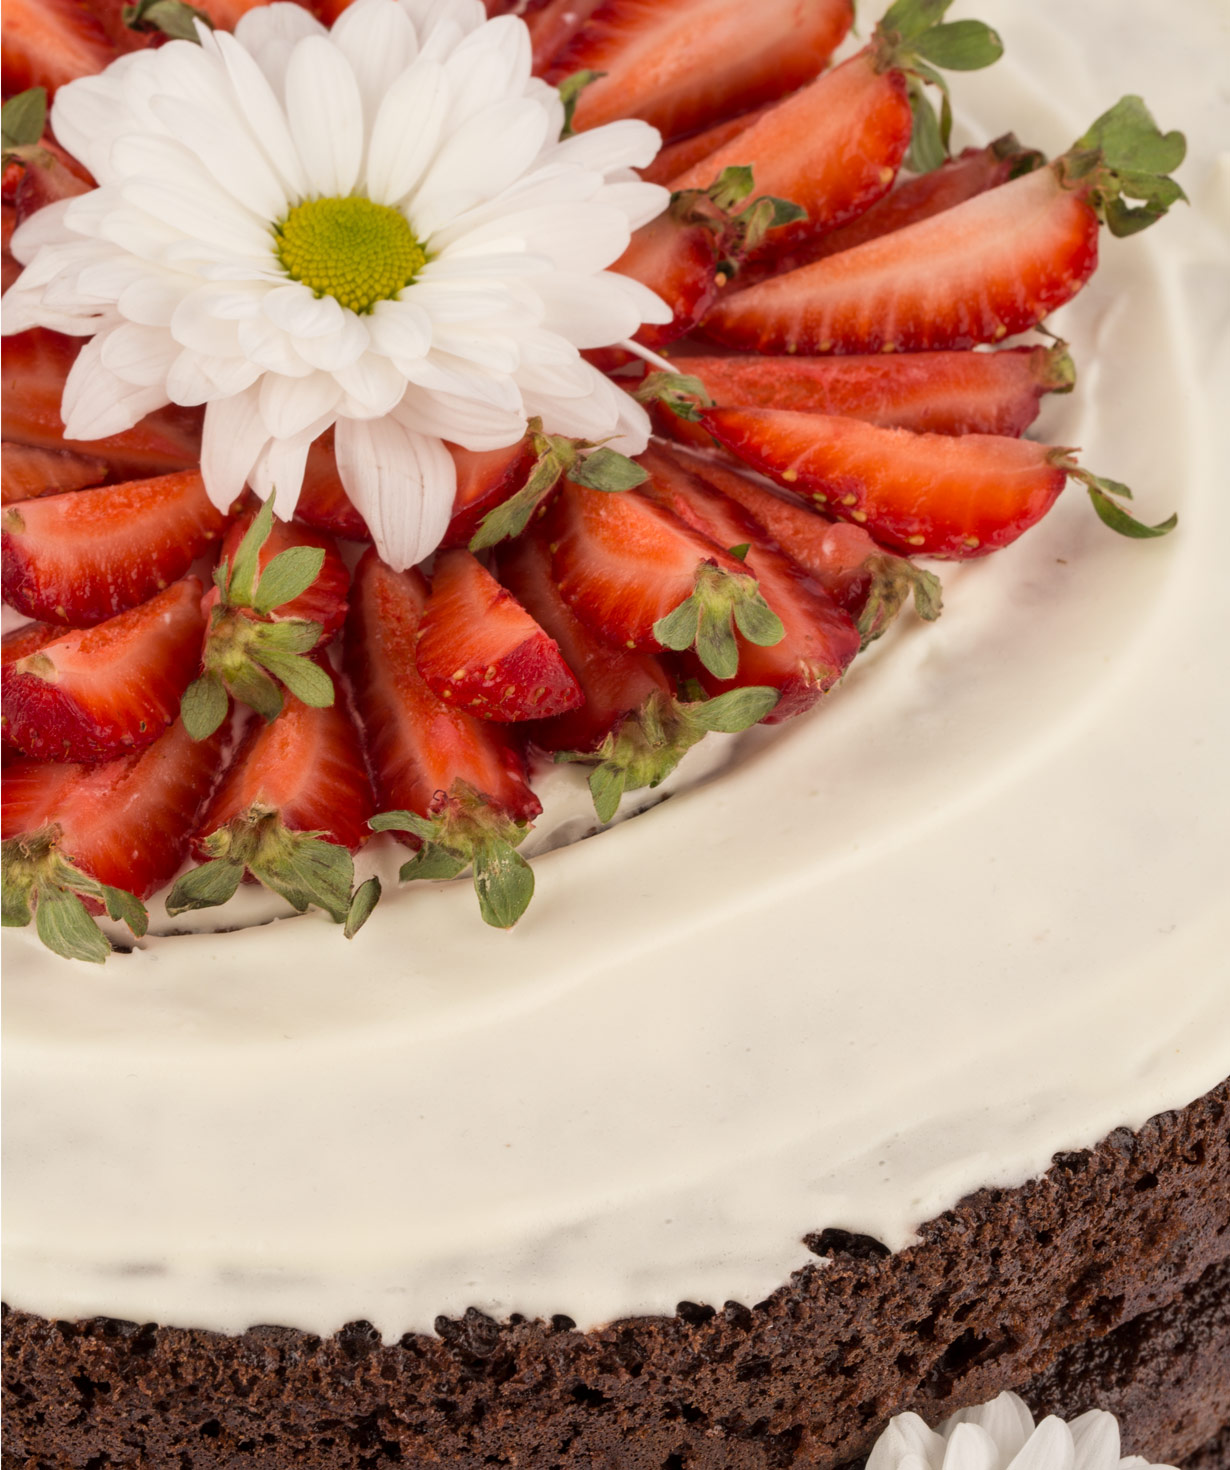 Cake   «Chrysanthemum»